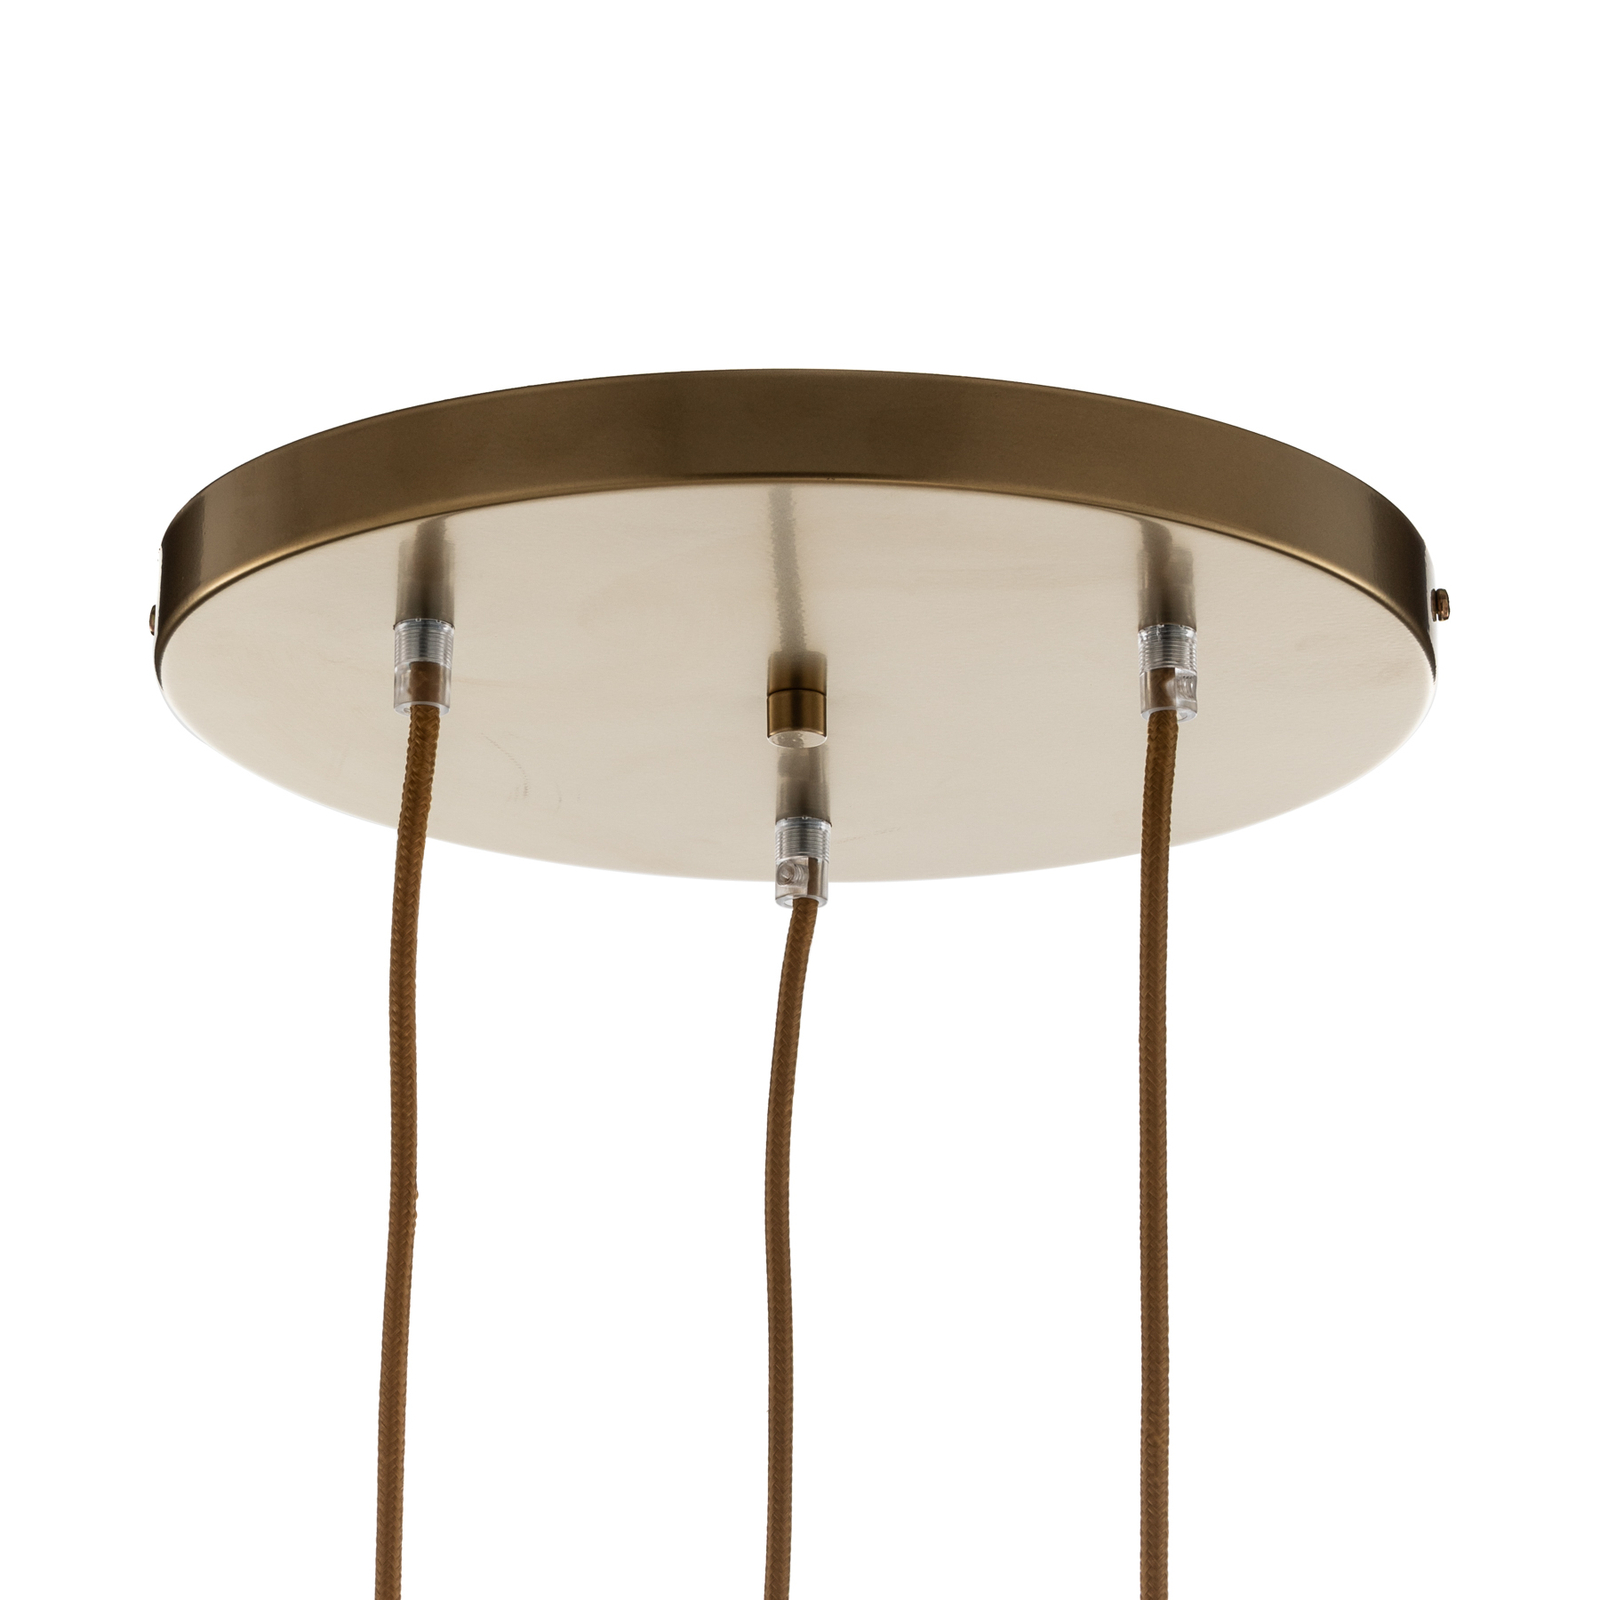 Hanglamp Monte, 3-lamps, rondel, goud